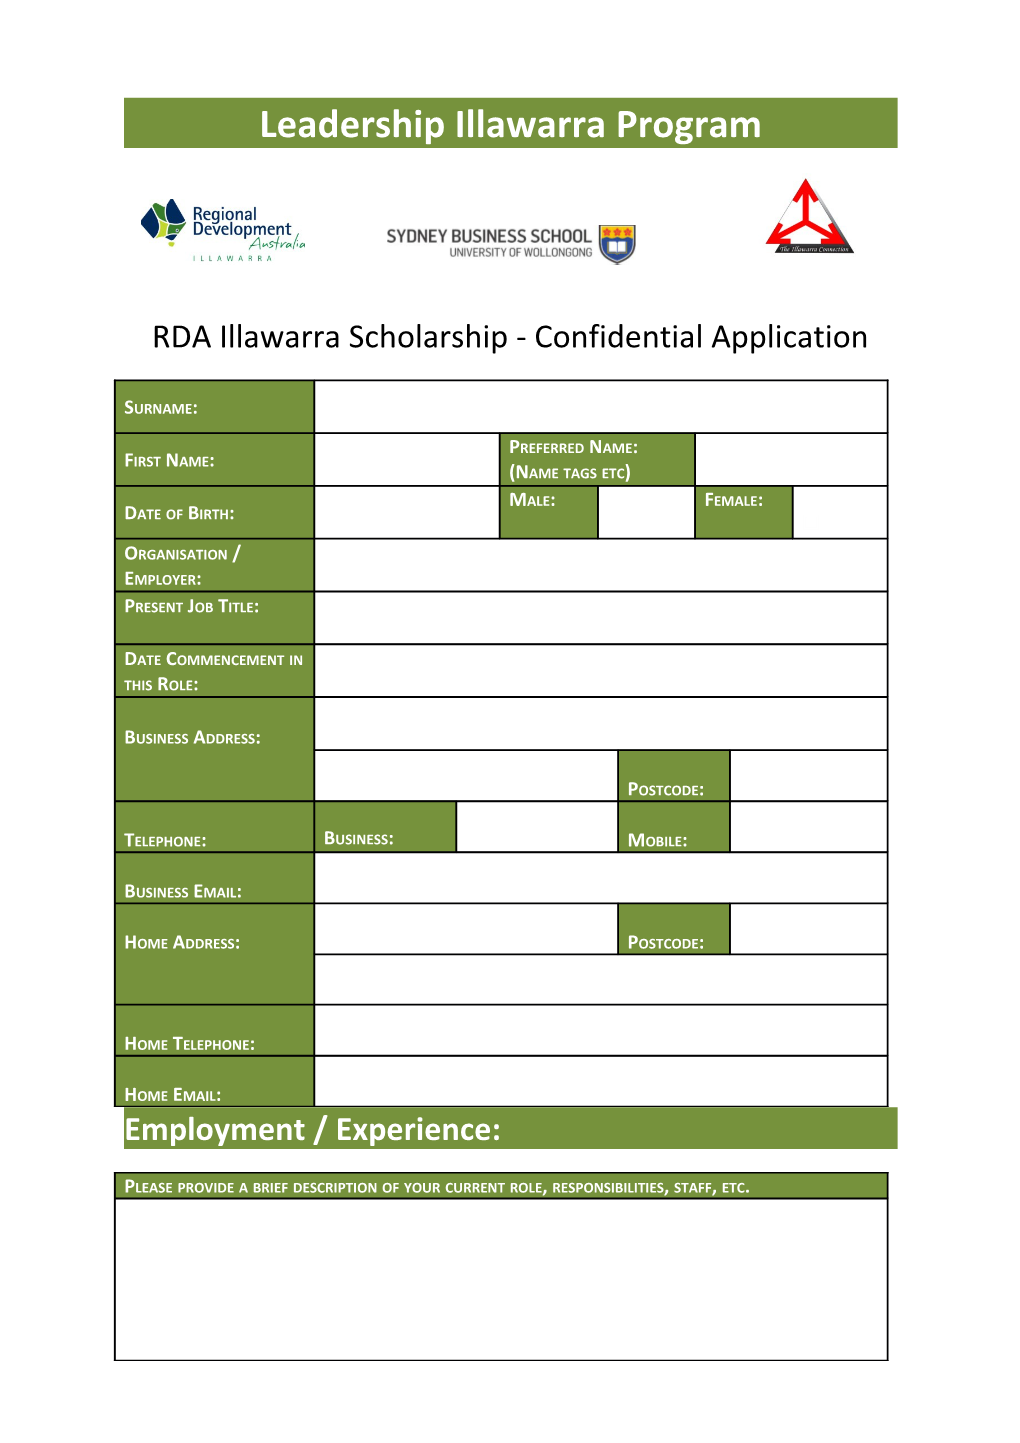 RDA Illawarra Scholarship - Confidential Application